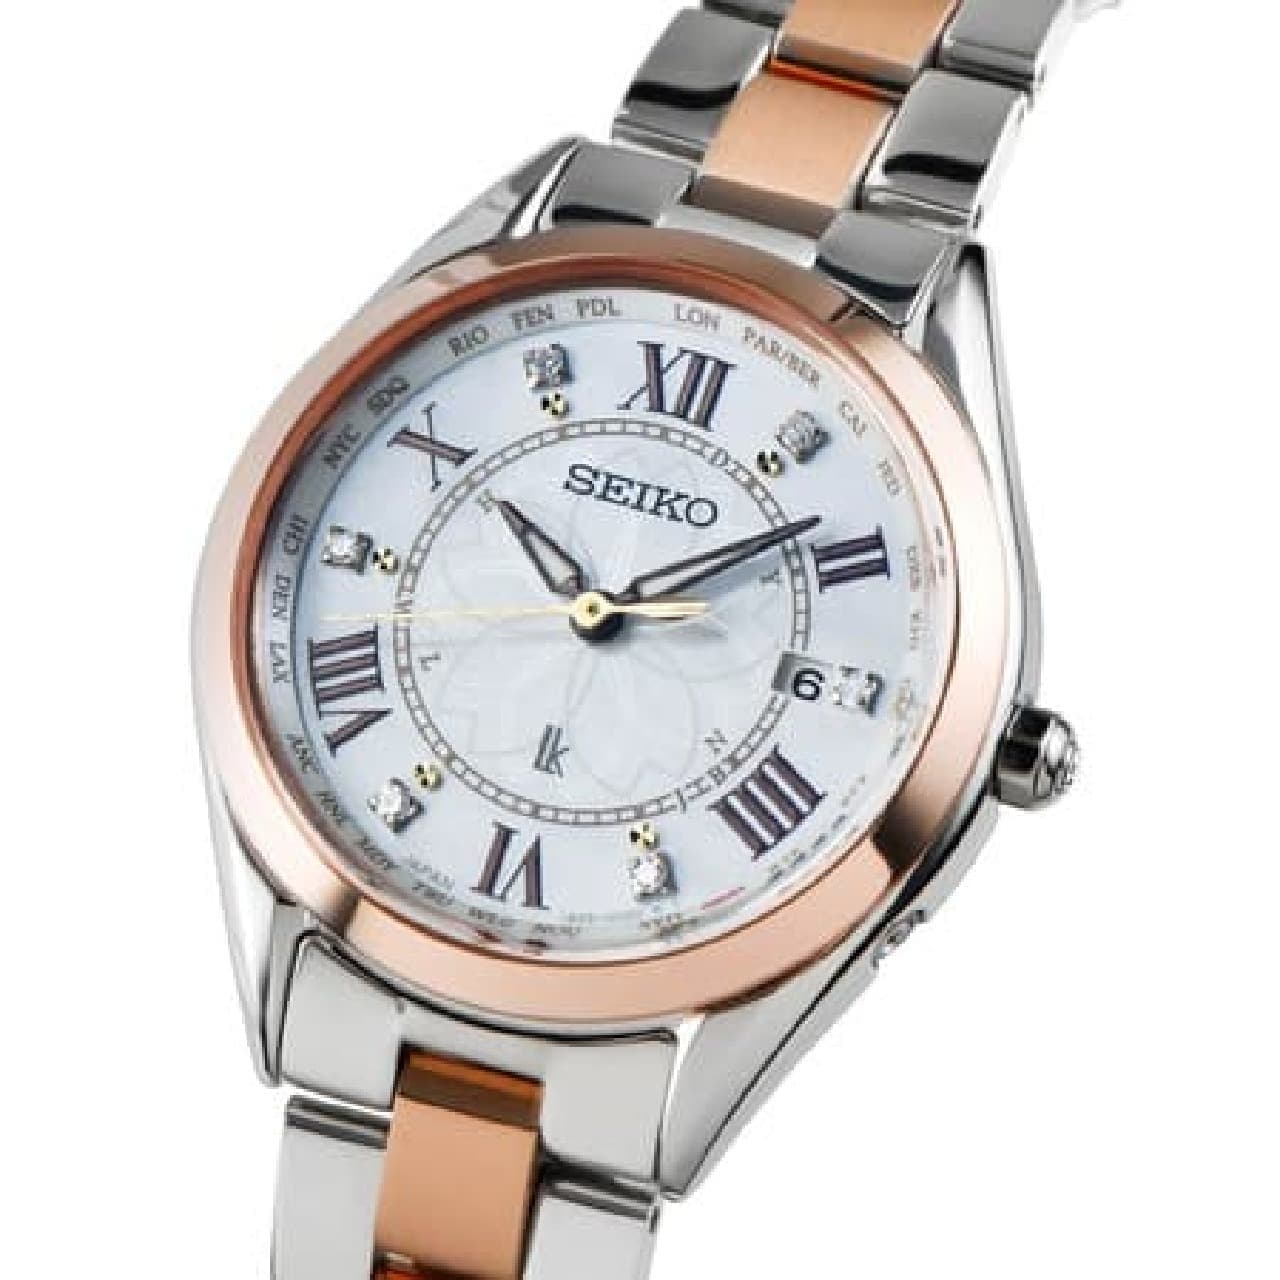 「2022 SAKURA Blooming 限定モデル」セイコーウオッチから -- 春を彩る桜モチーフの腕時計